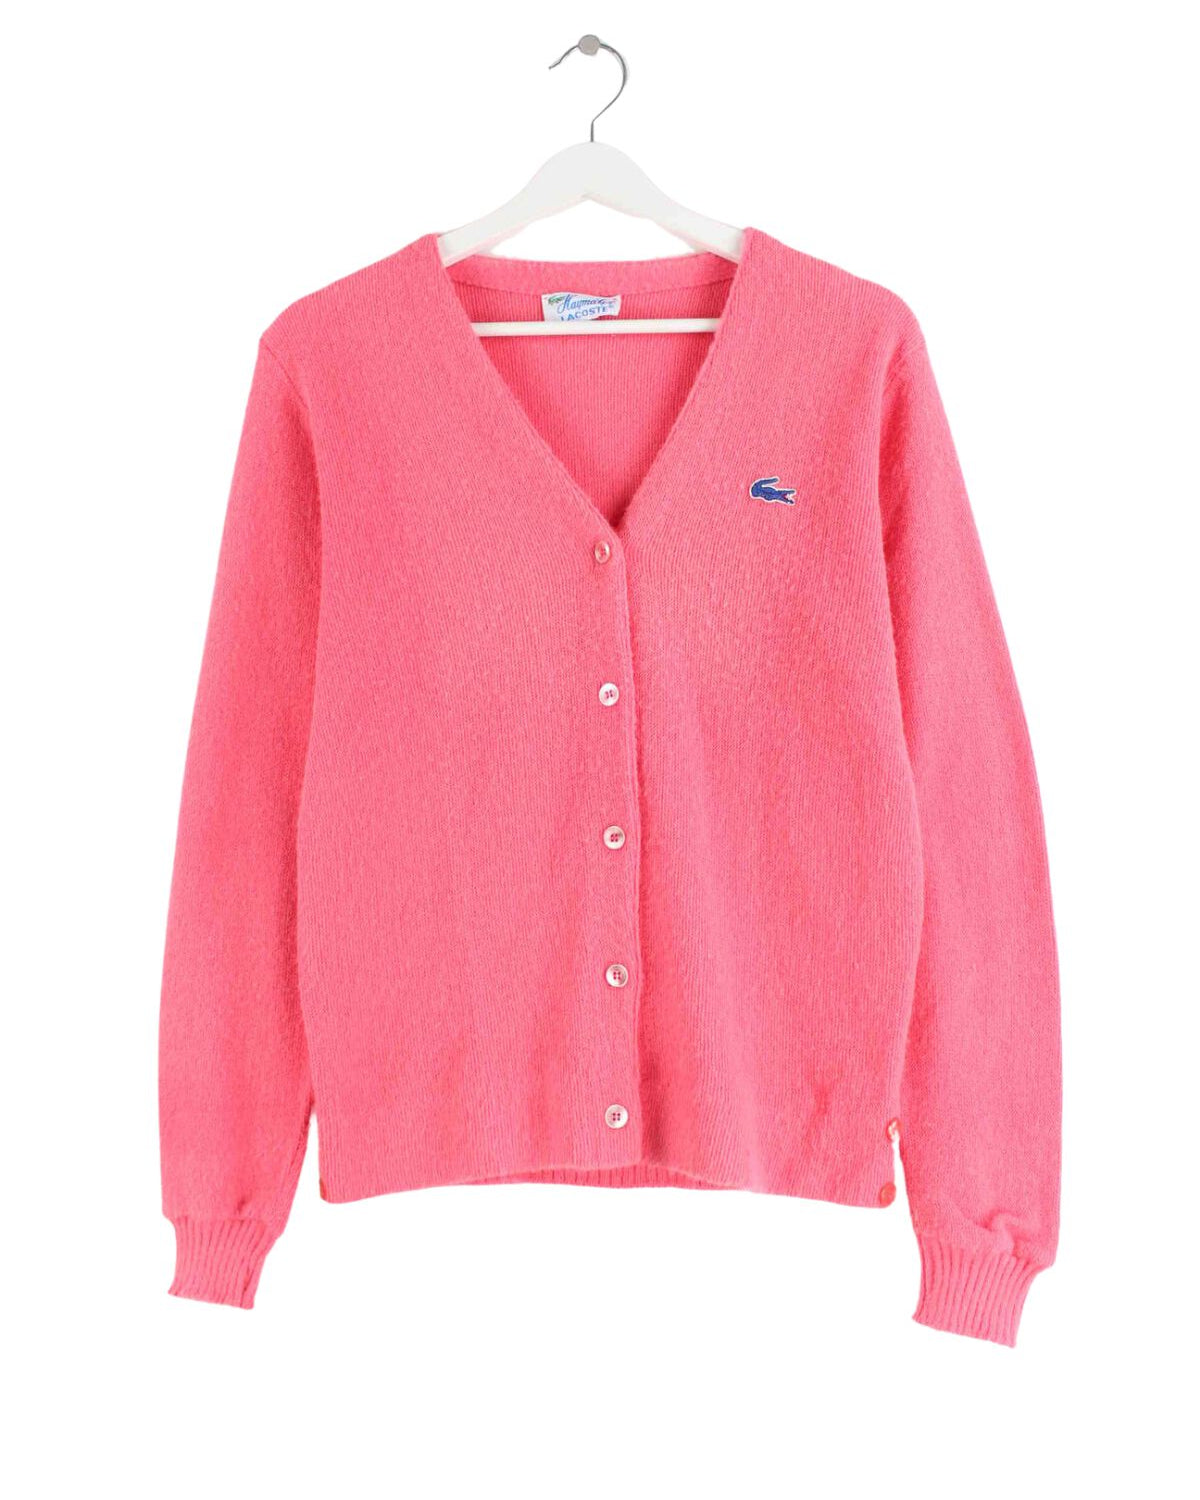 Lacoste Damen 90s Vintage Pullover Pink M (front image)